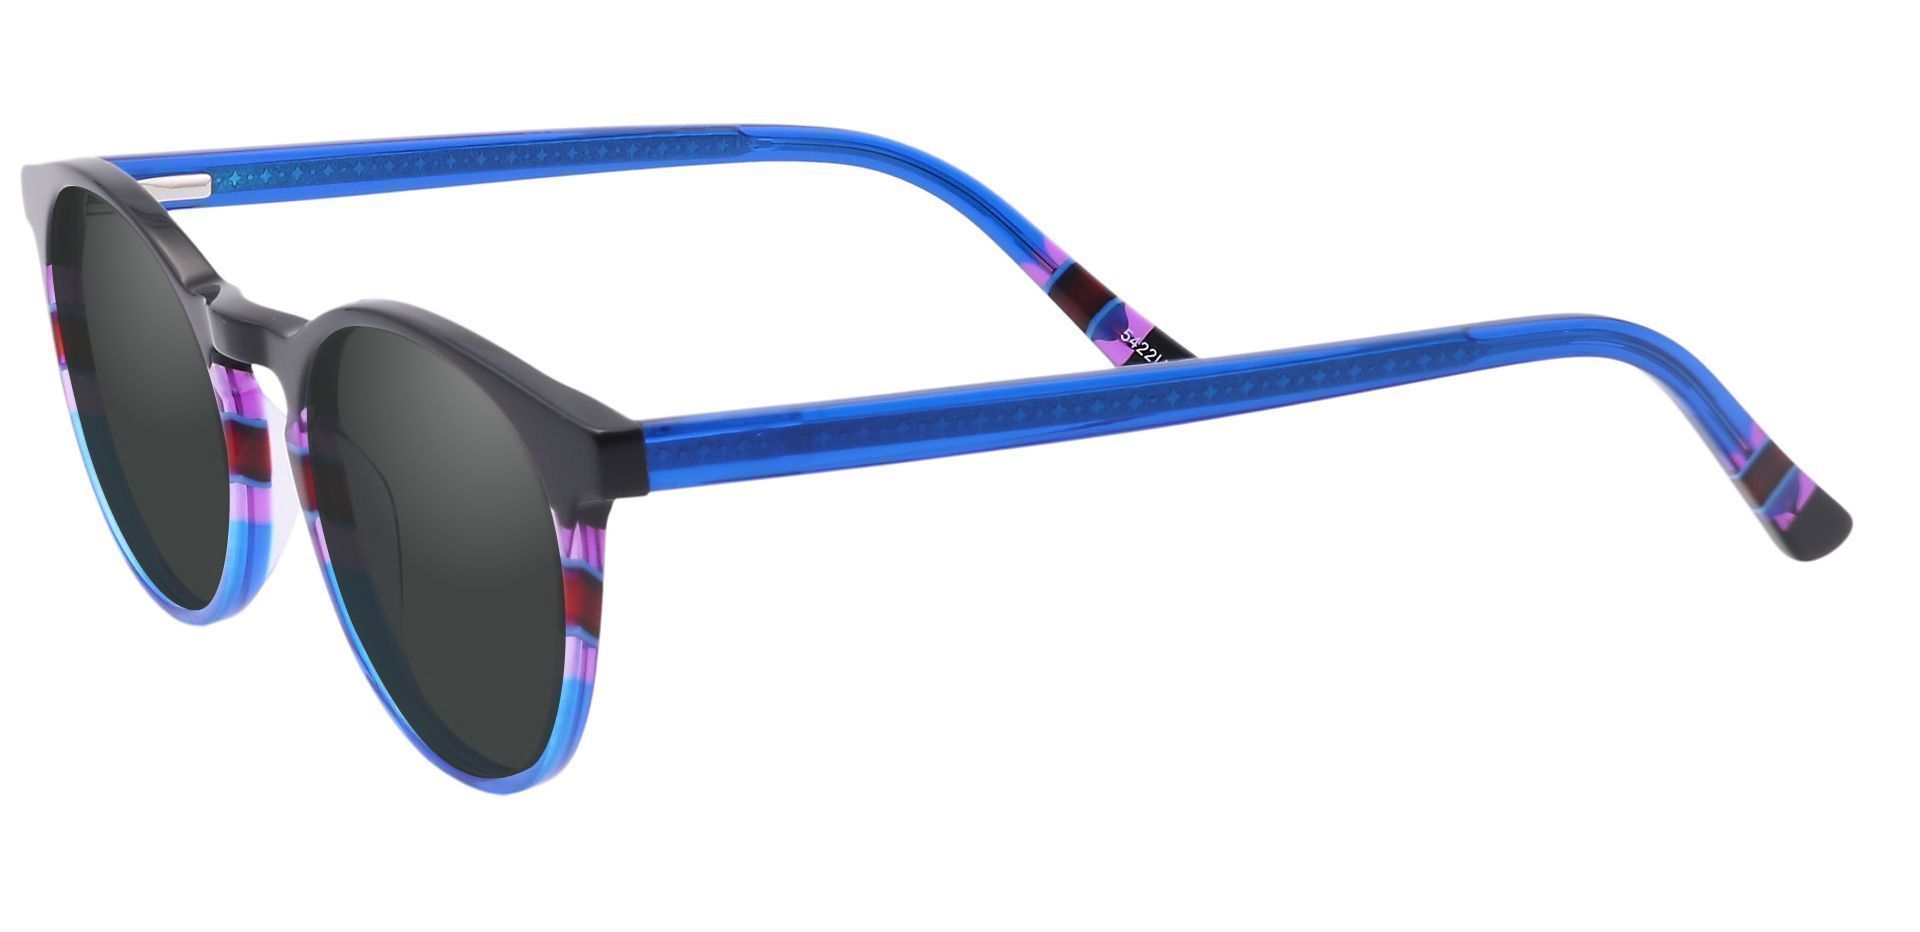 Jellie Round Prescription Sunglasses - Blue Frame With Gray Lenses